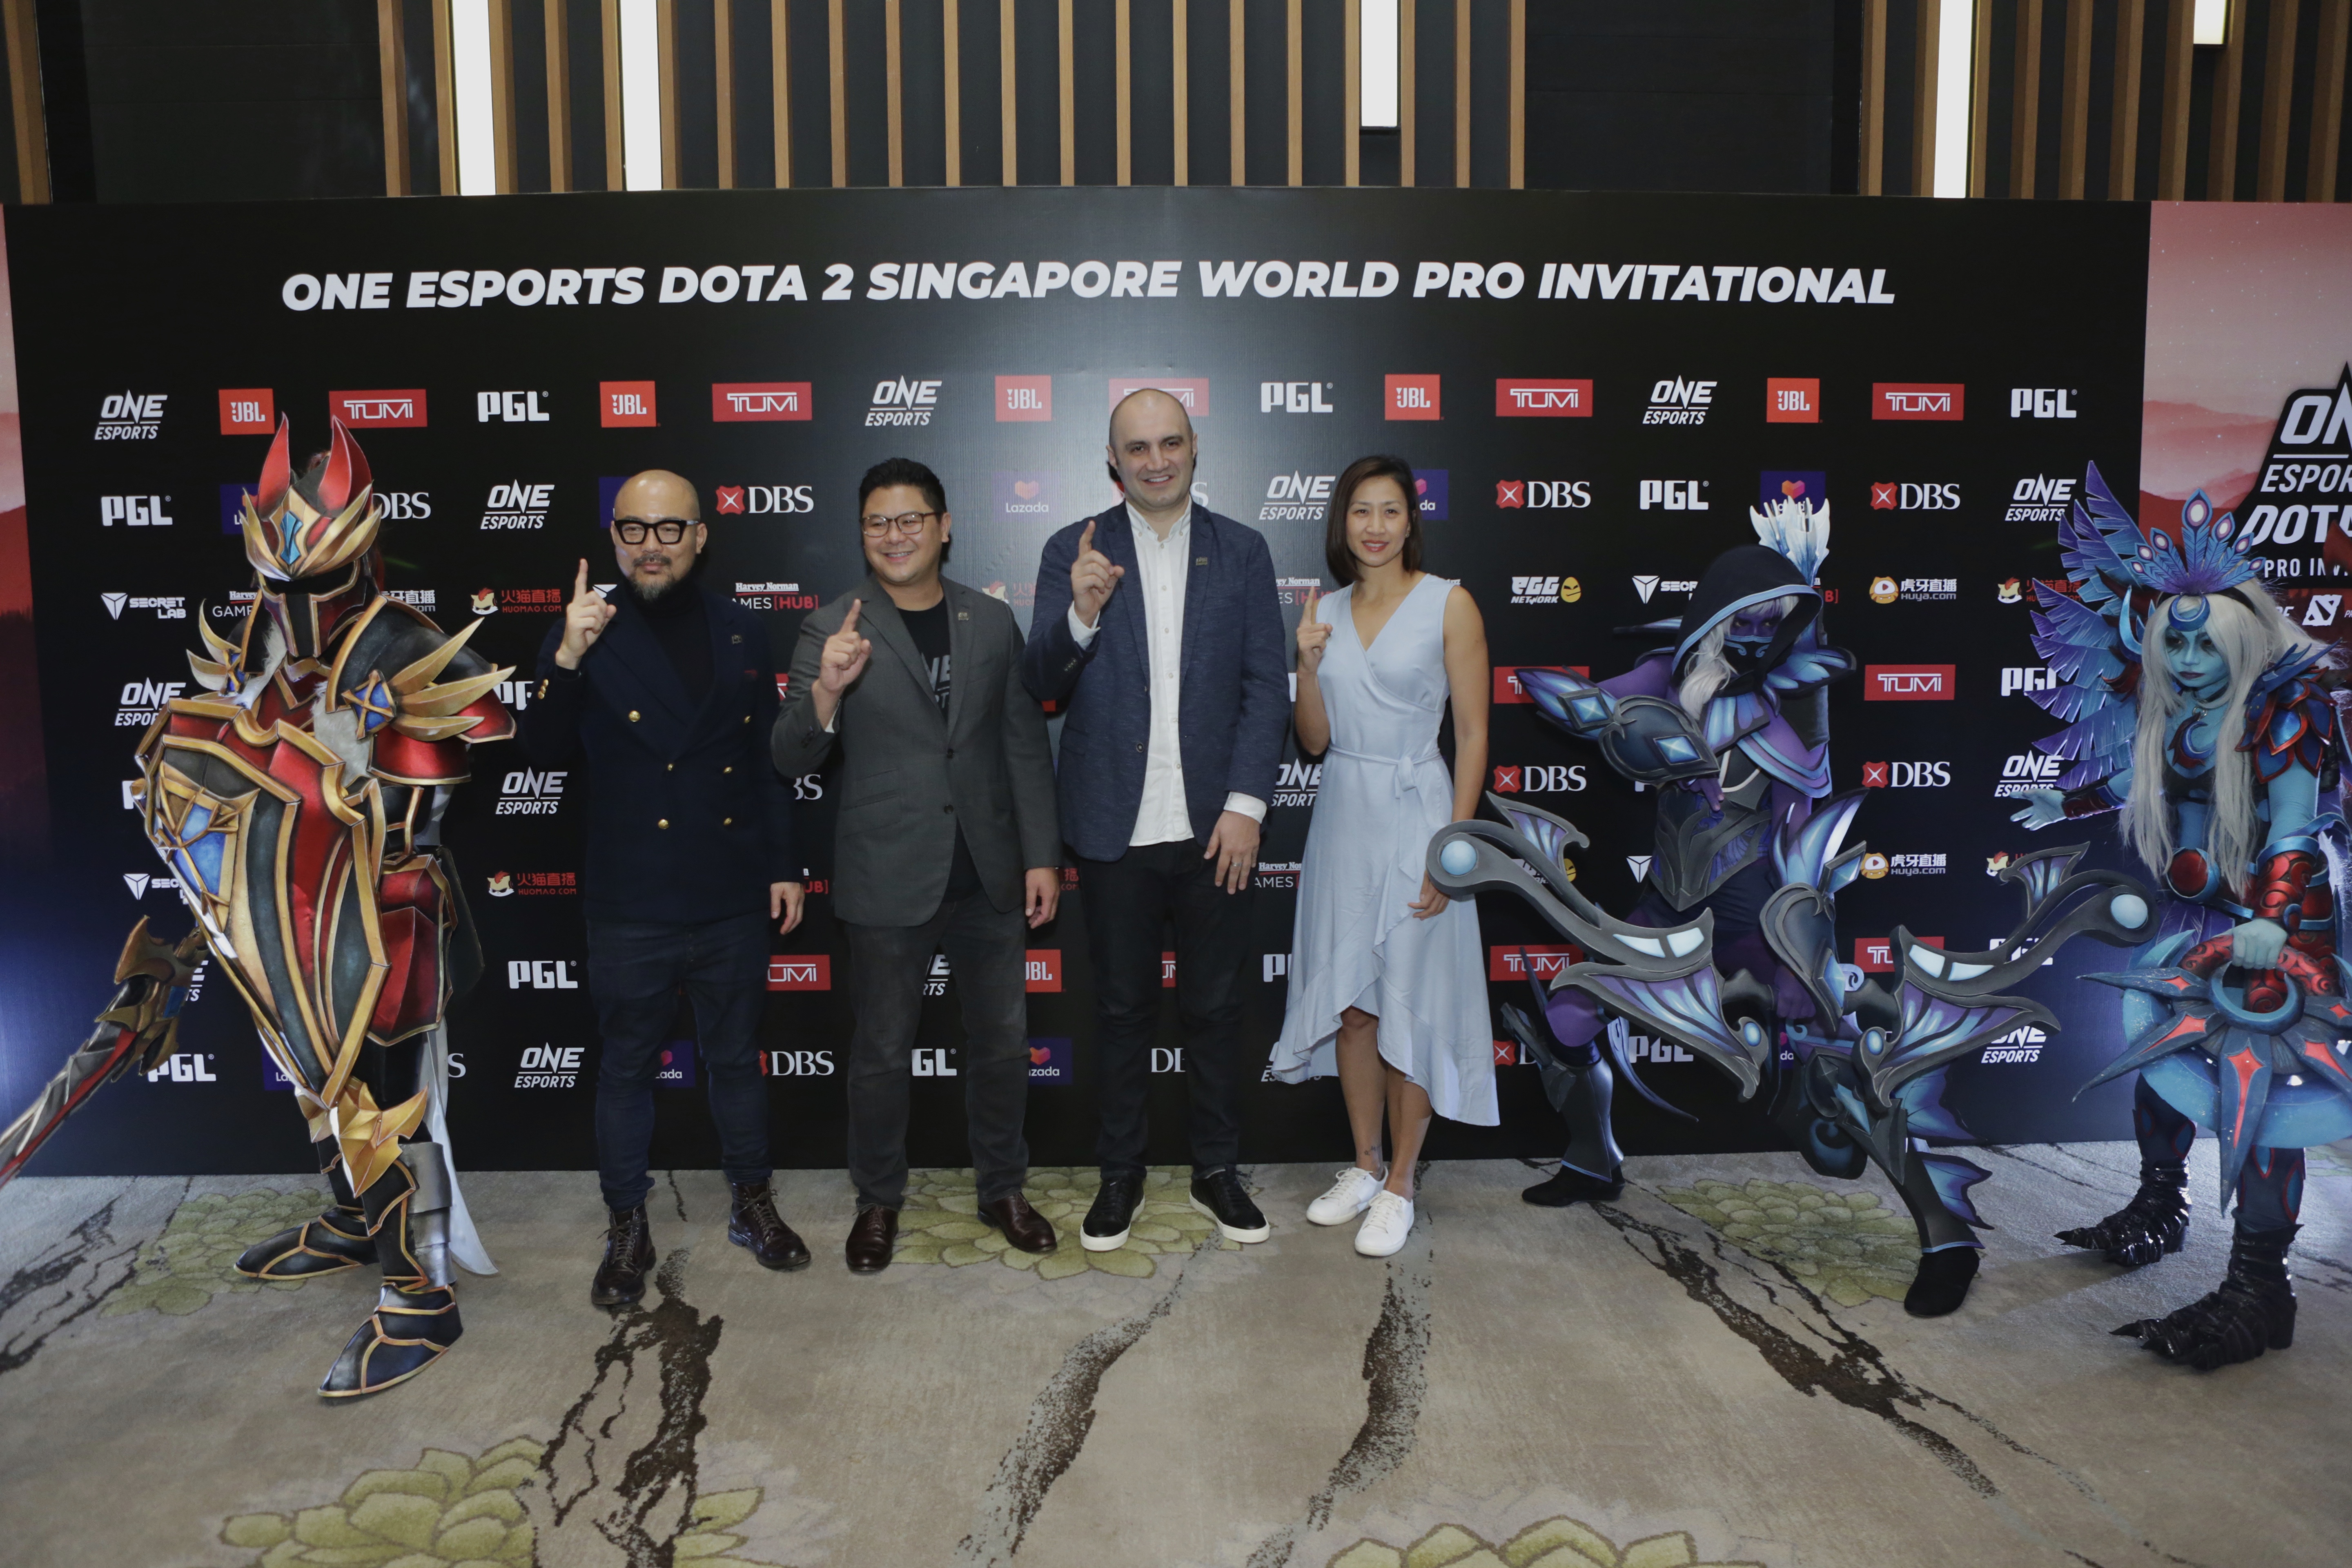 ONE Esports CEO Carlos Alimurung: Executing ONE Esports Dota 2 Invitational, ONE Esports Dota 2 Singapore Major is a herculean effort